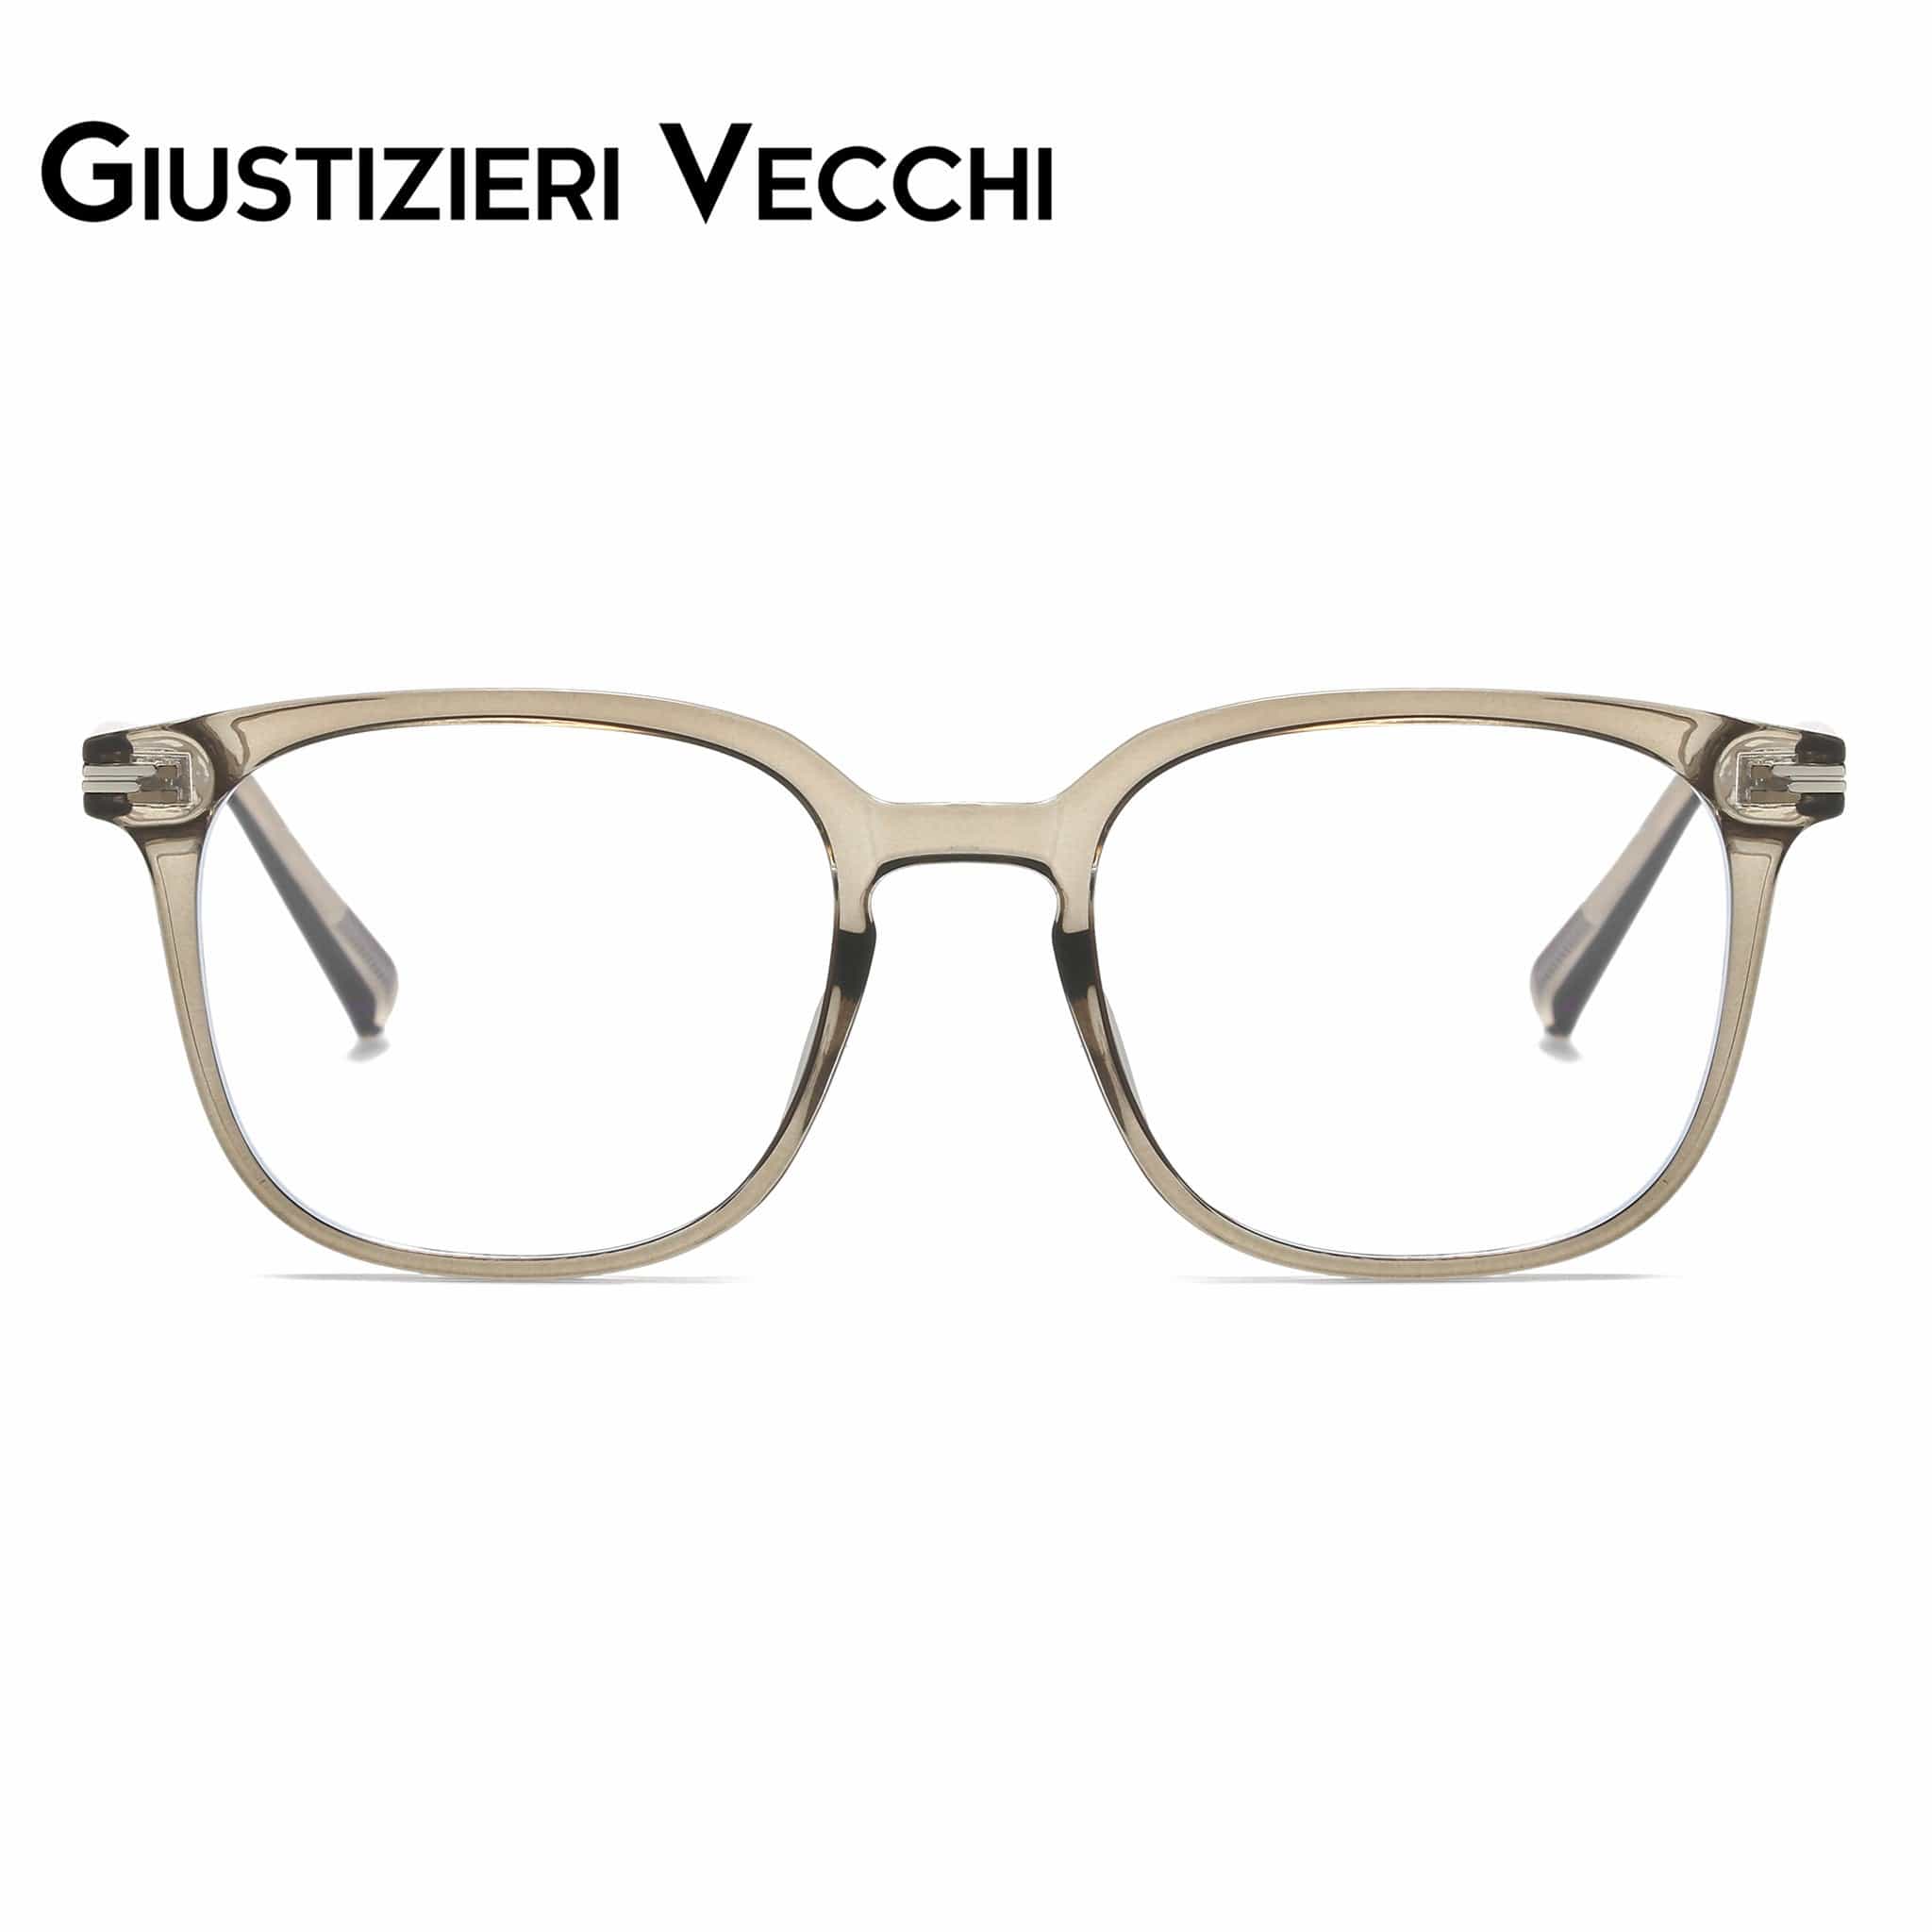 GIUSTIZIERI VECCHI Eyeglasses Medium / Soft Amber SkyBloom Uno